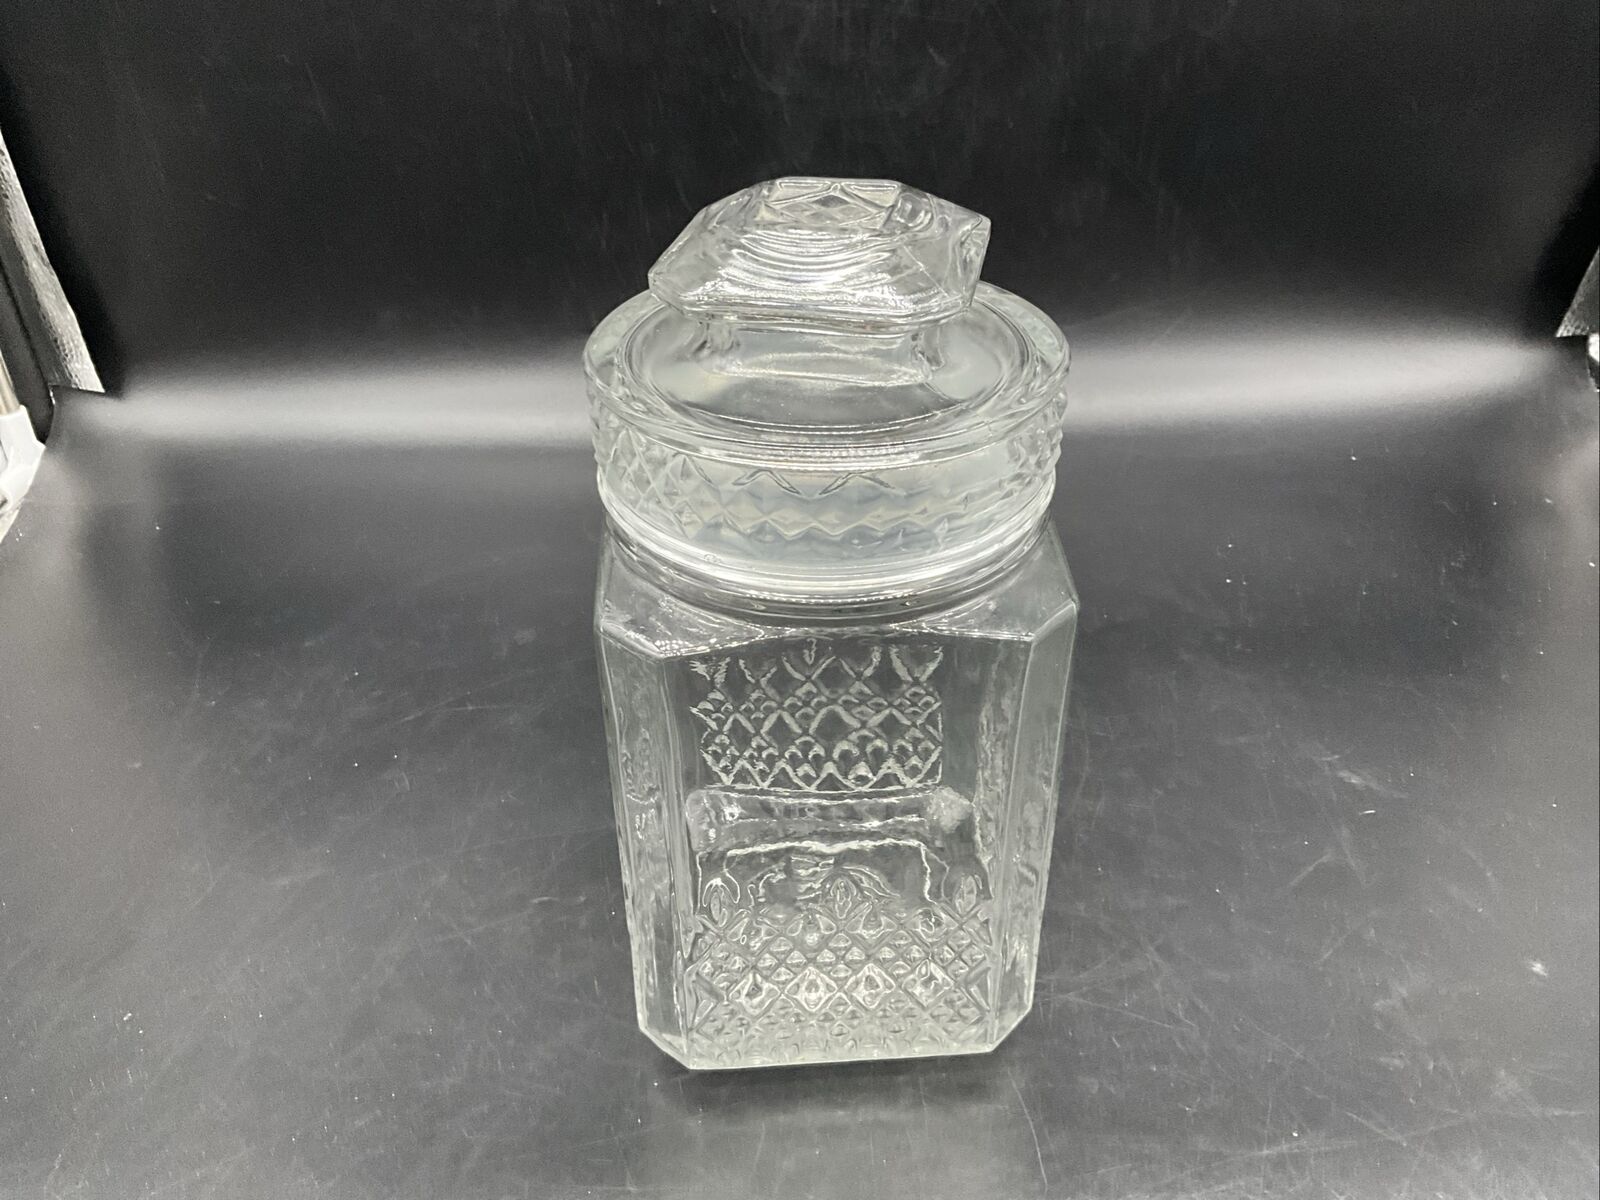 VTG Koeze's 1919 Glass canister/Jar